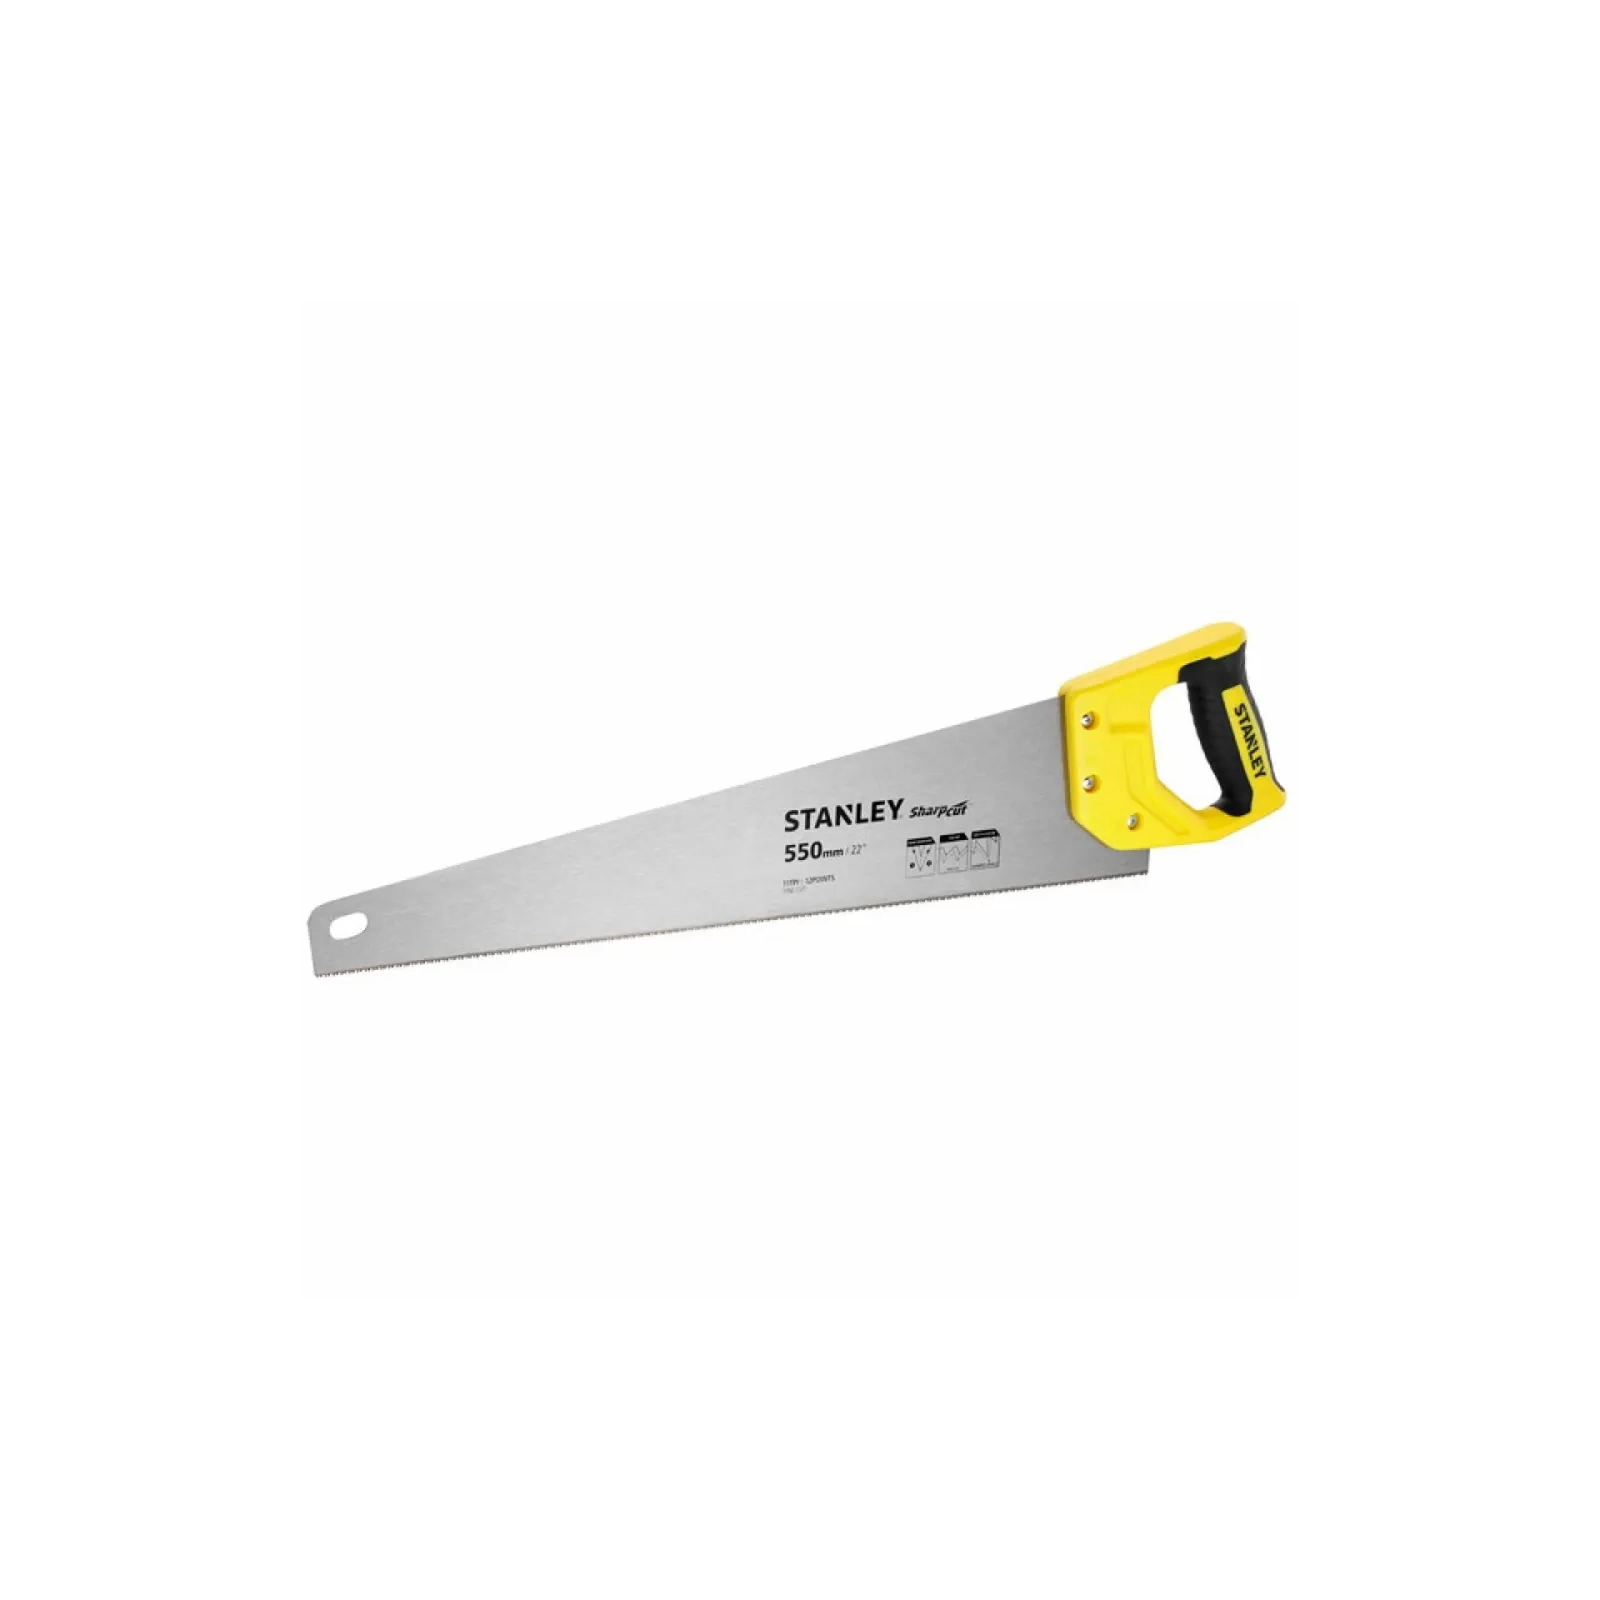 Ножівка Stanley SHARPCUT із загартованими зубами, L=550мм, 11 tpi. (STHT20372-1)